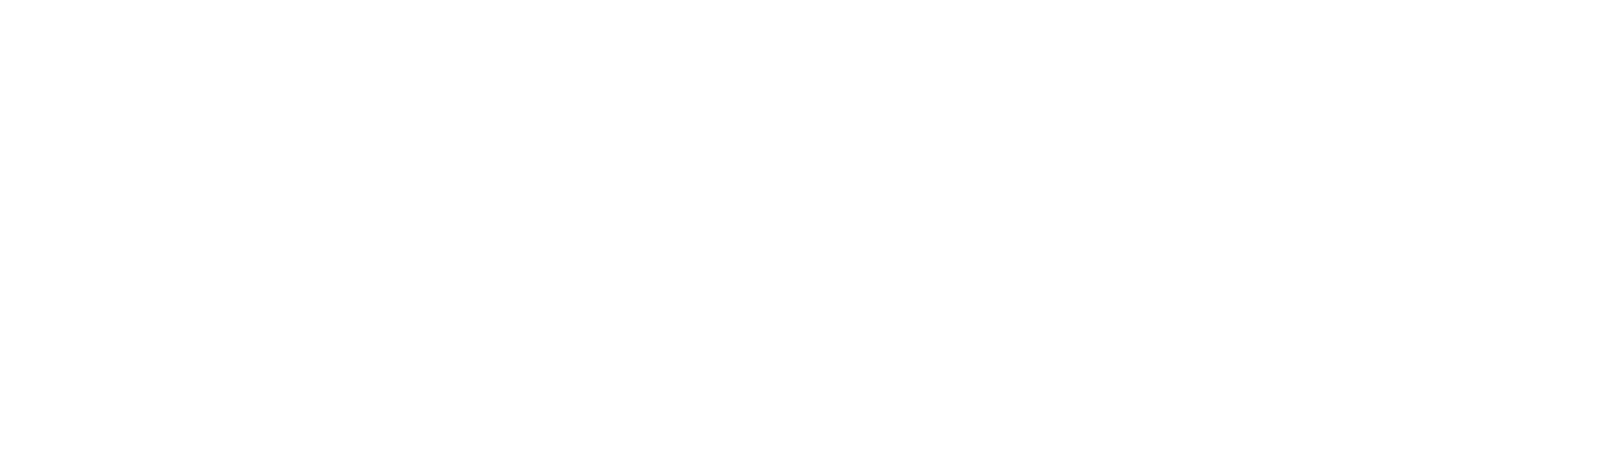 Insure Life Financial Group logo